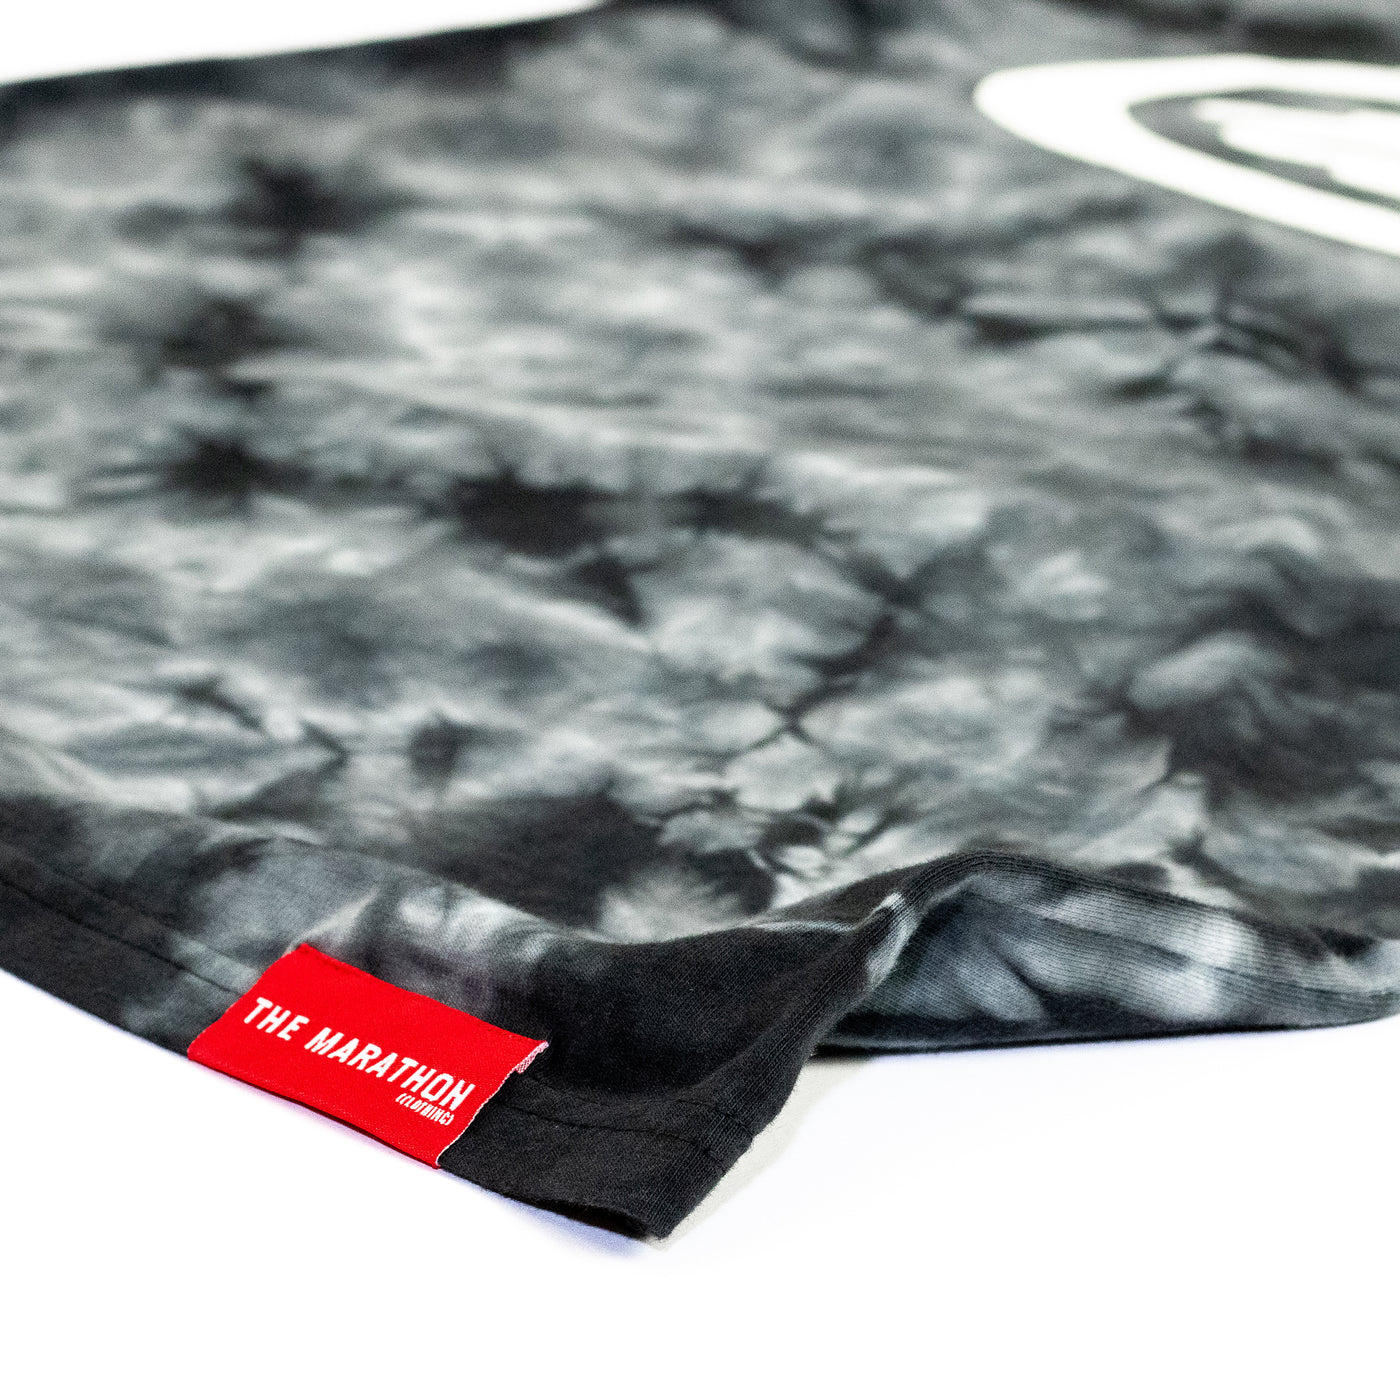 Crenshaw Limited Edition T-shirt - Black/Charcoal Tie Dye - Detail 2